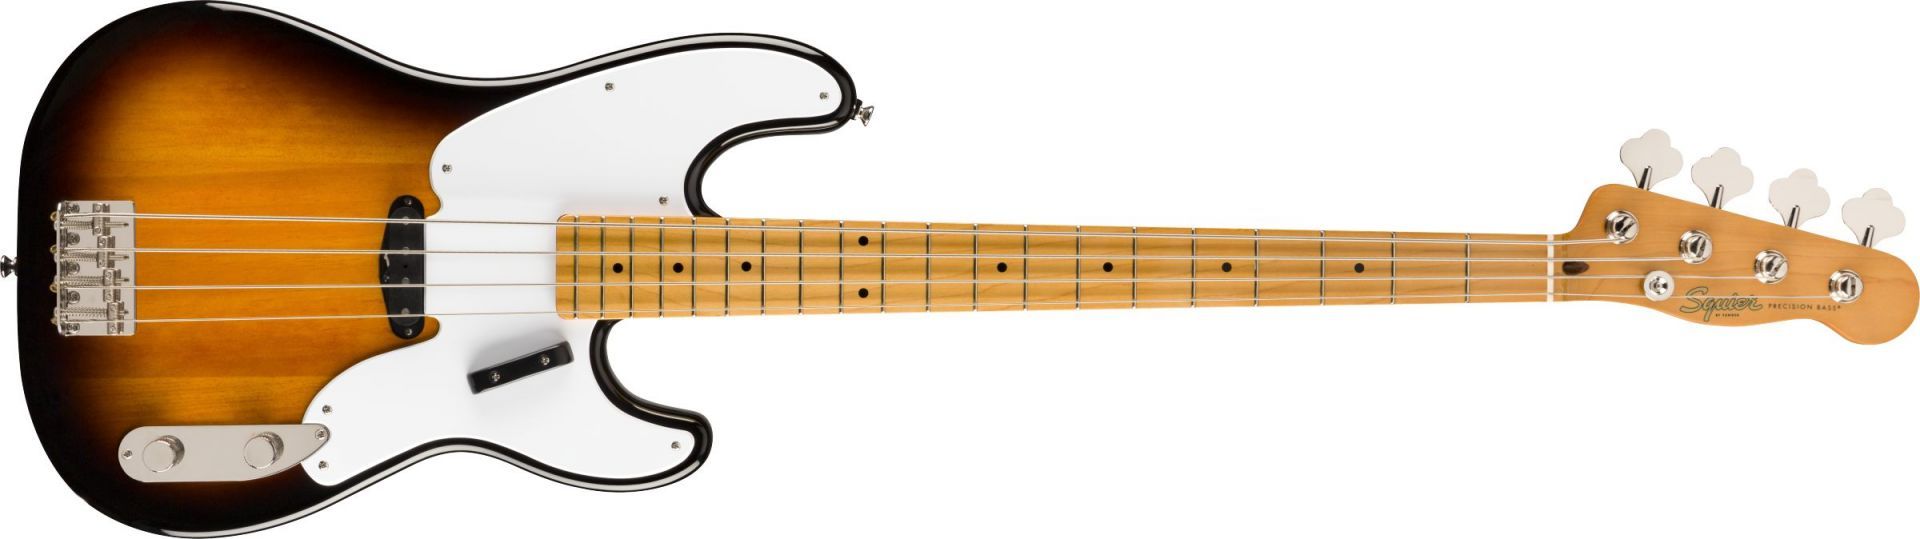 Squier Classic Vibe 50s Precision Bass Maple Fingerboard 2-Color Sunburst